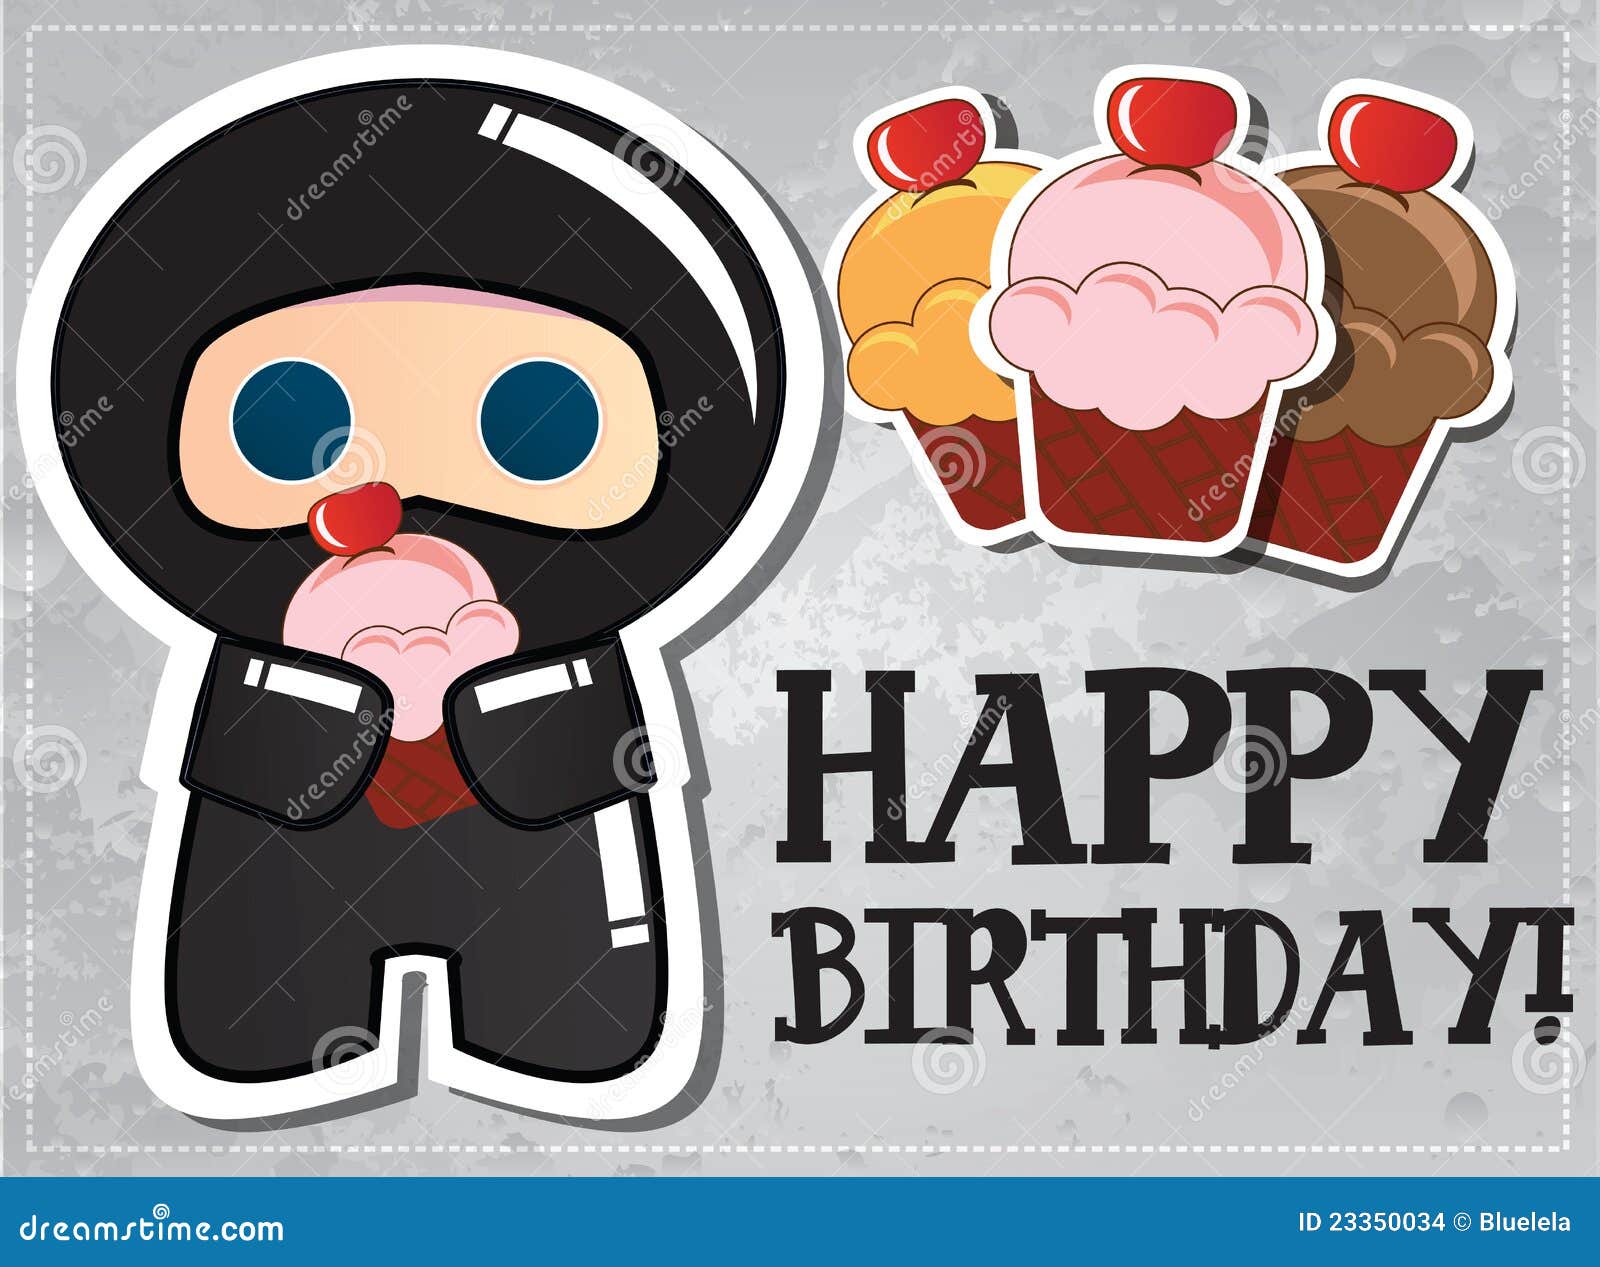 Happy Birthday Card With Cute Cartoon Ninja Stock Images - Image: 233500341300 x 1046